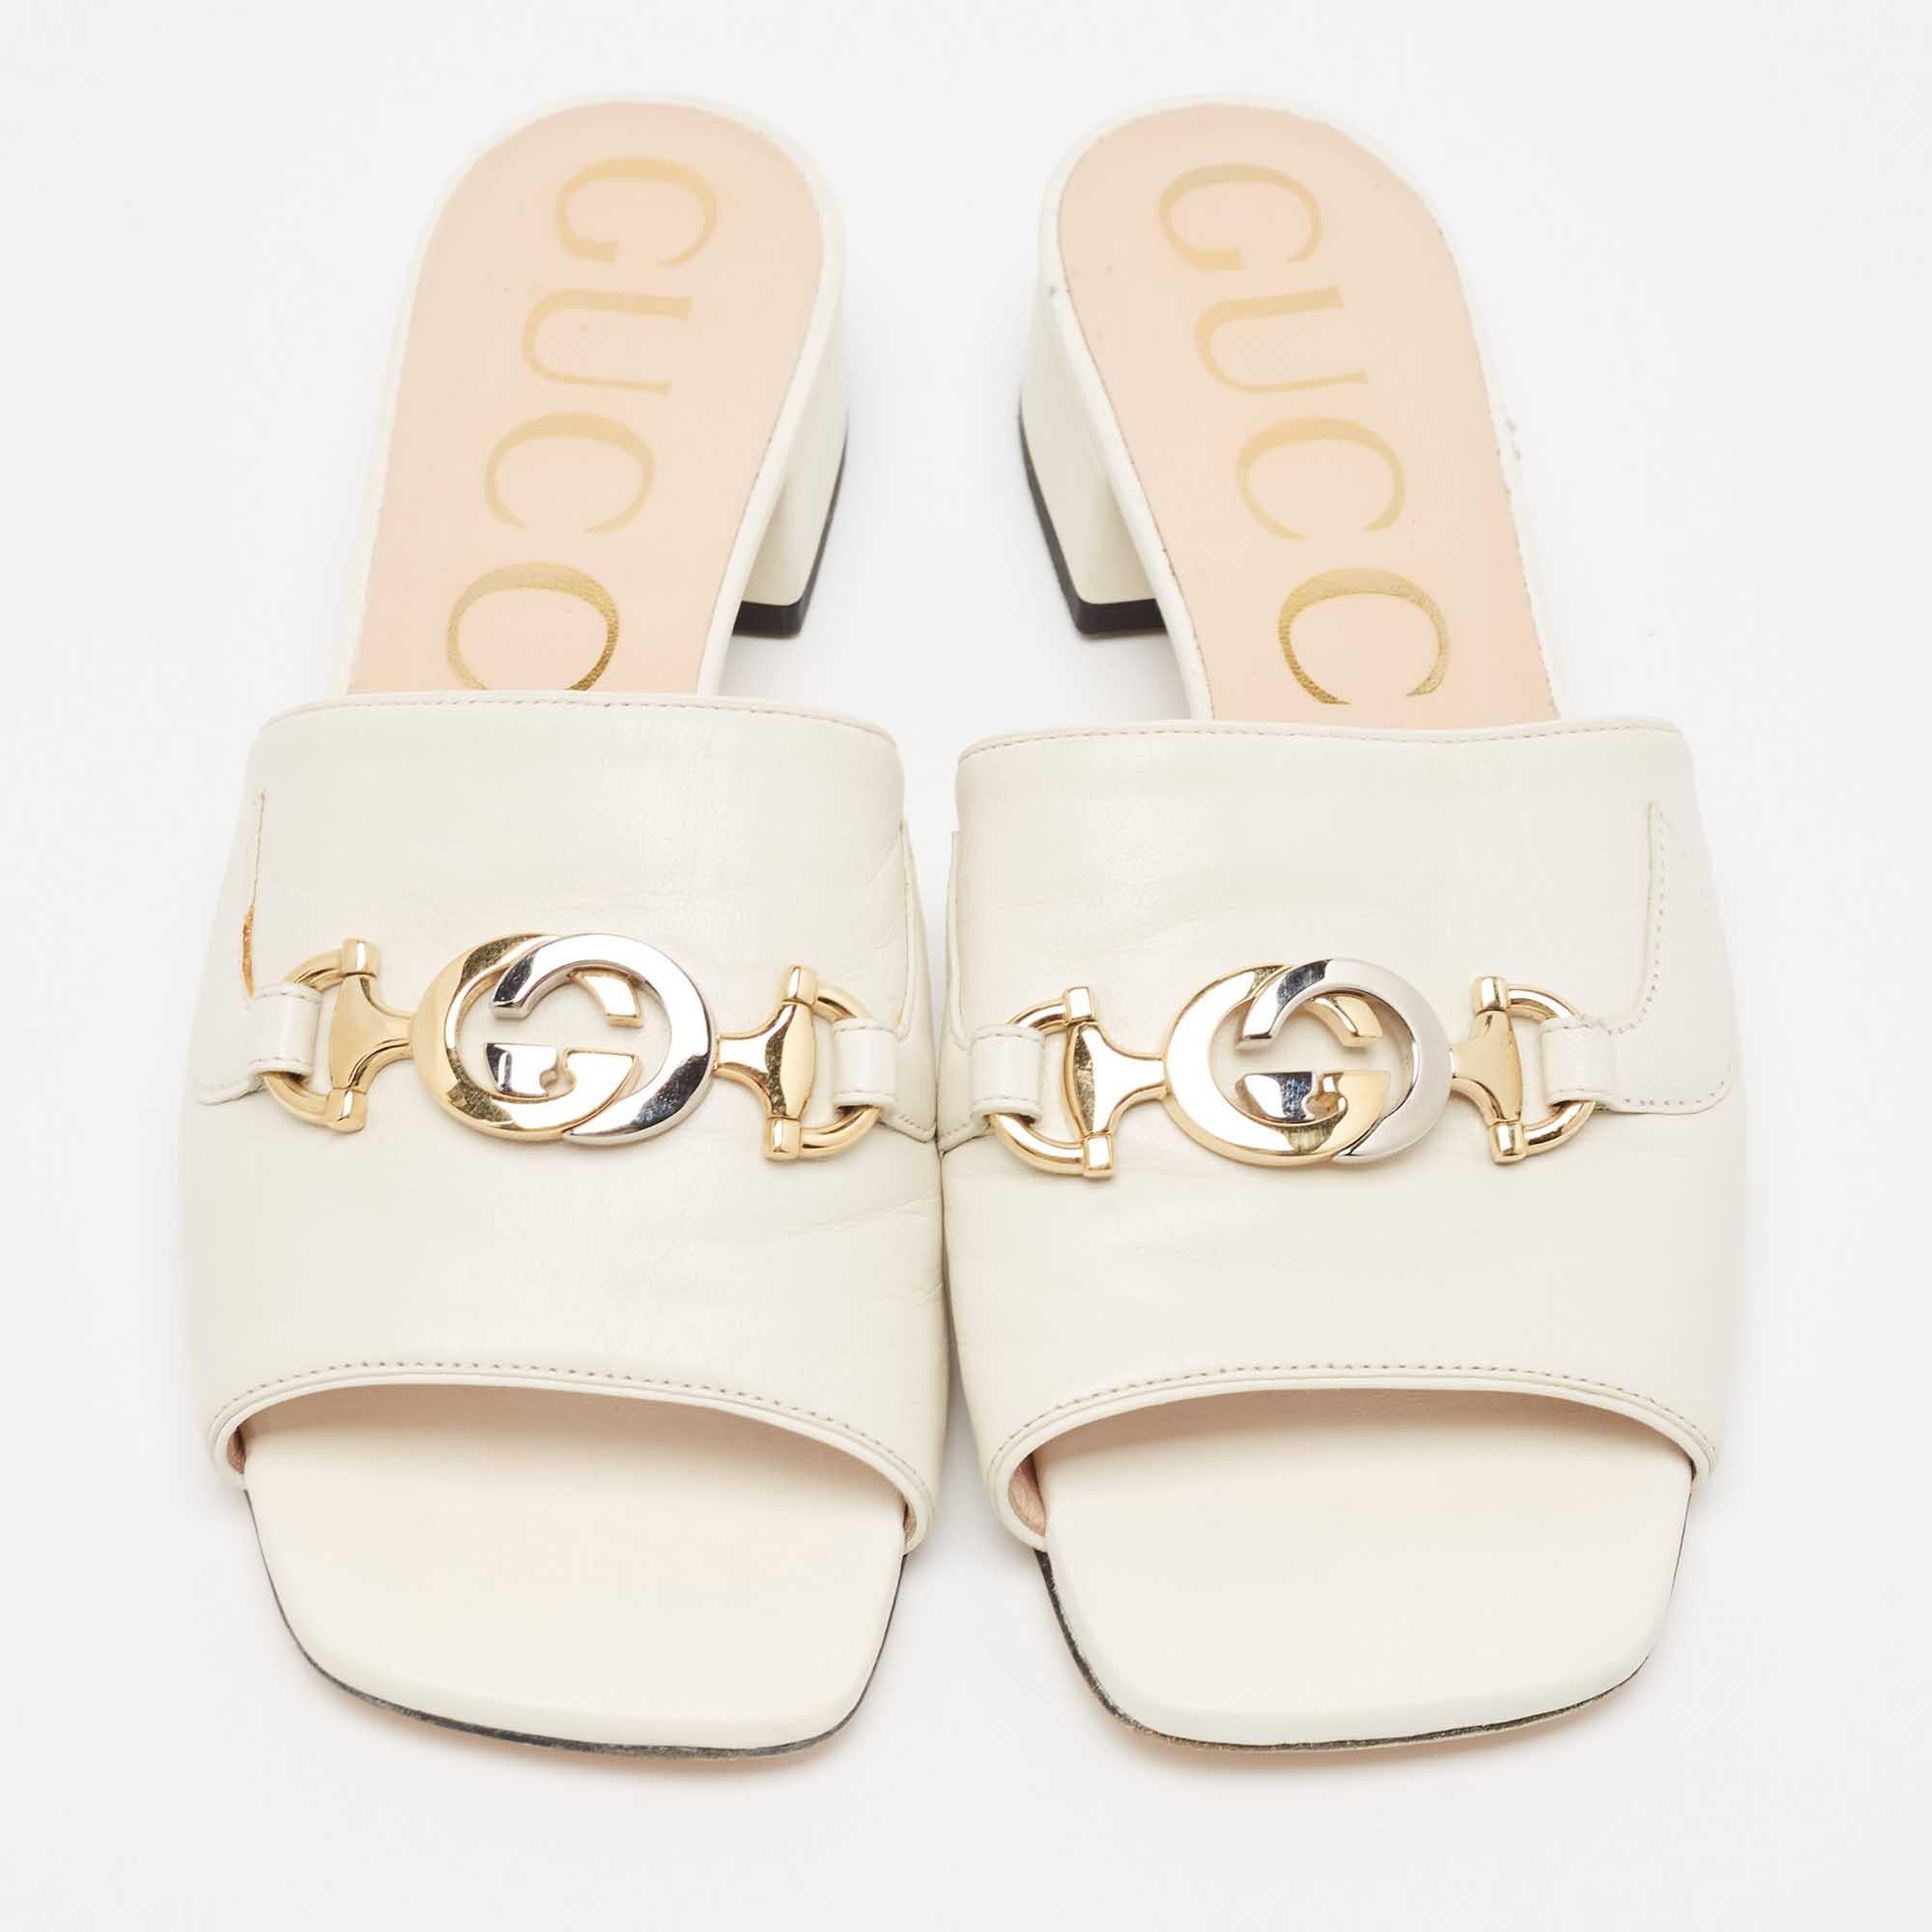 Women's Gucci Off White Leather Zumi Slide Sandals Size 37